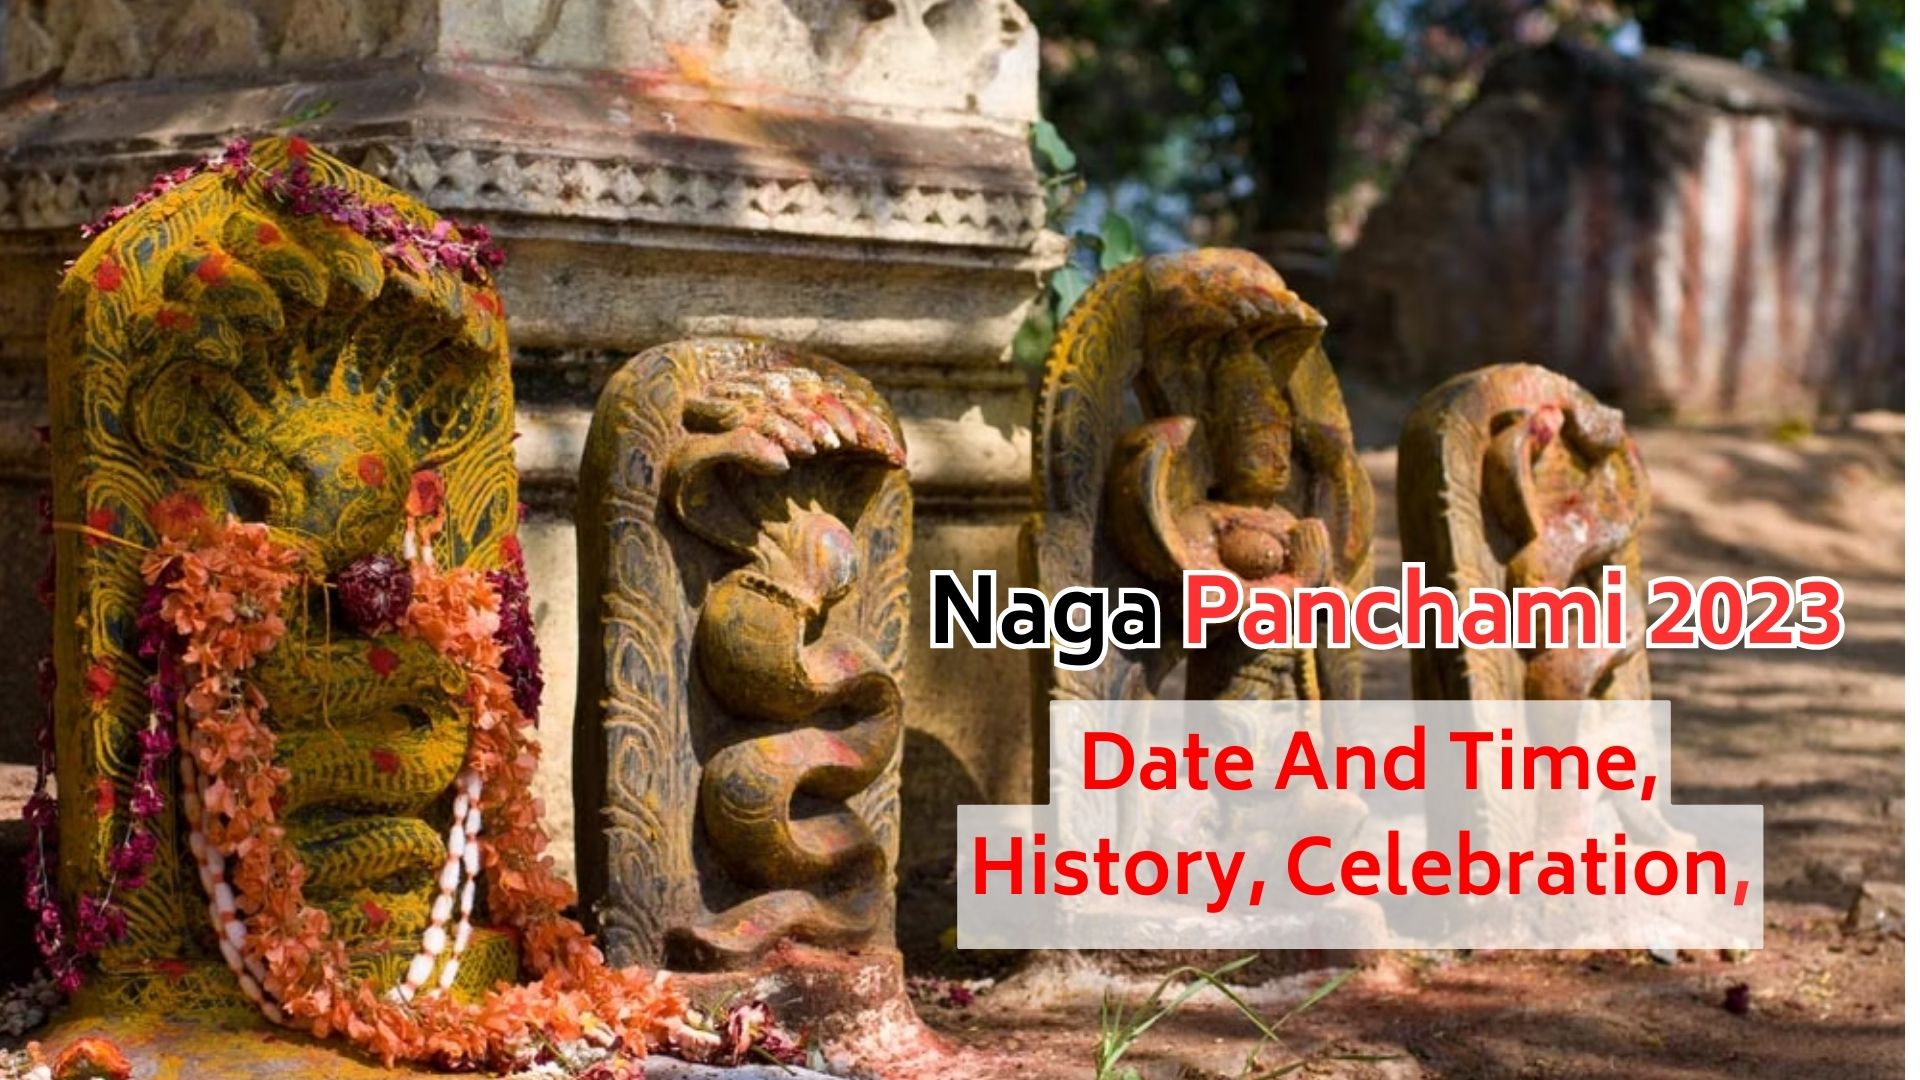 Naga Panchami 2023: Date and Time, History